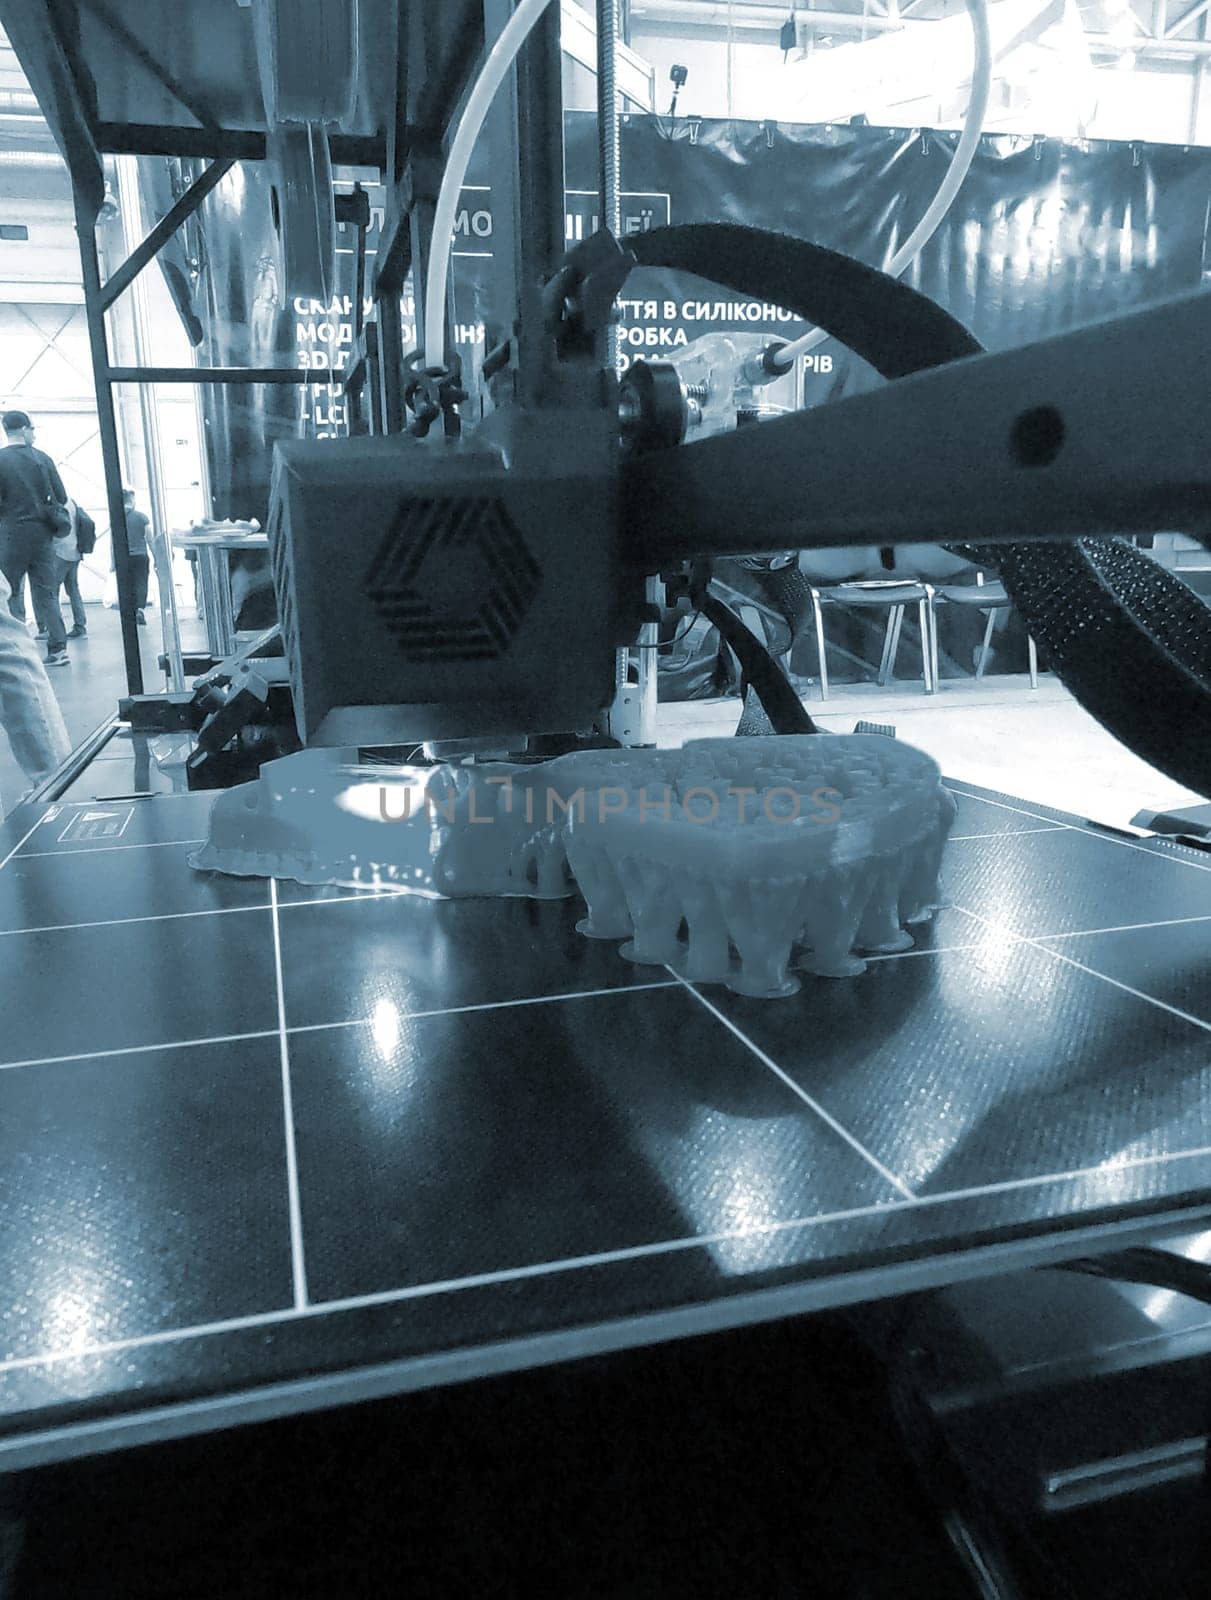 3D printer working close-up 3D printer prints a model from molten plastic by Mari1408